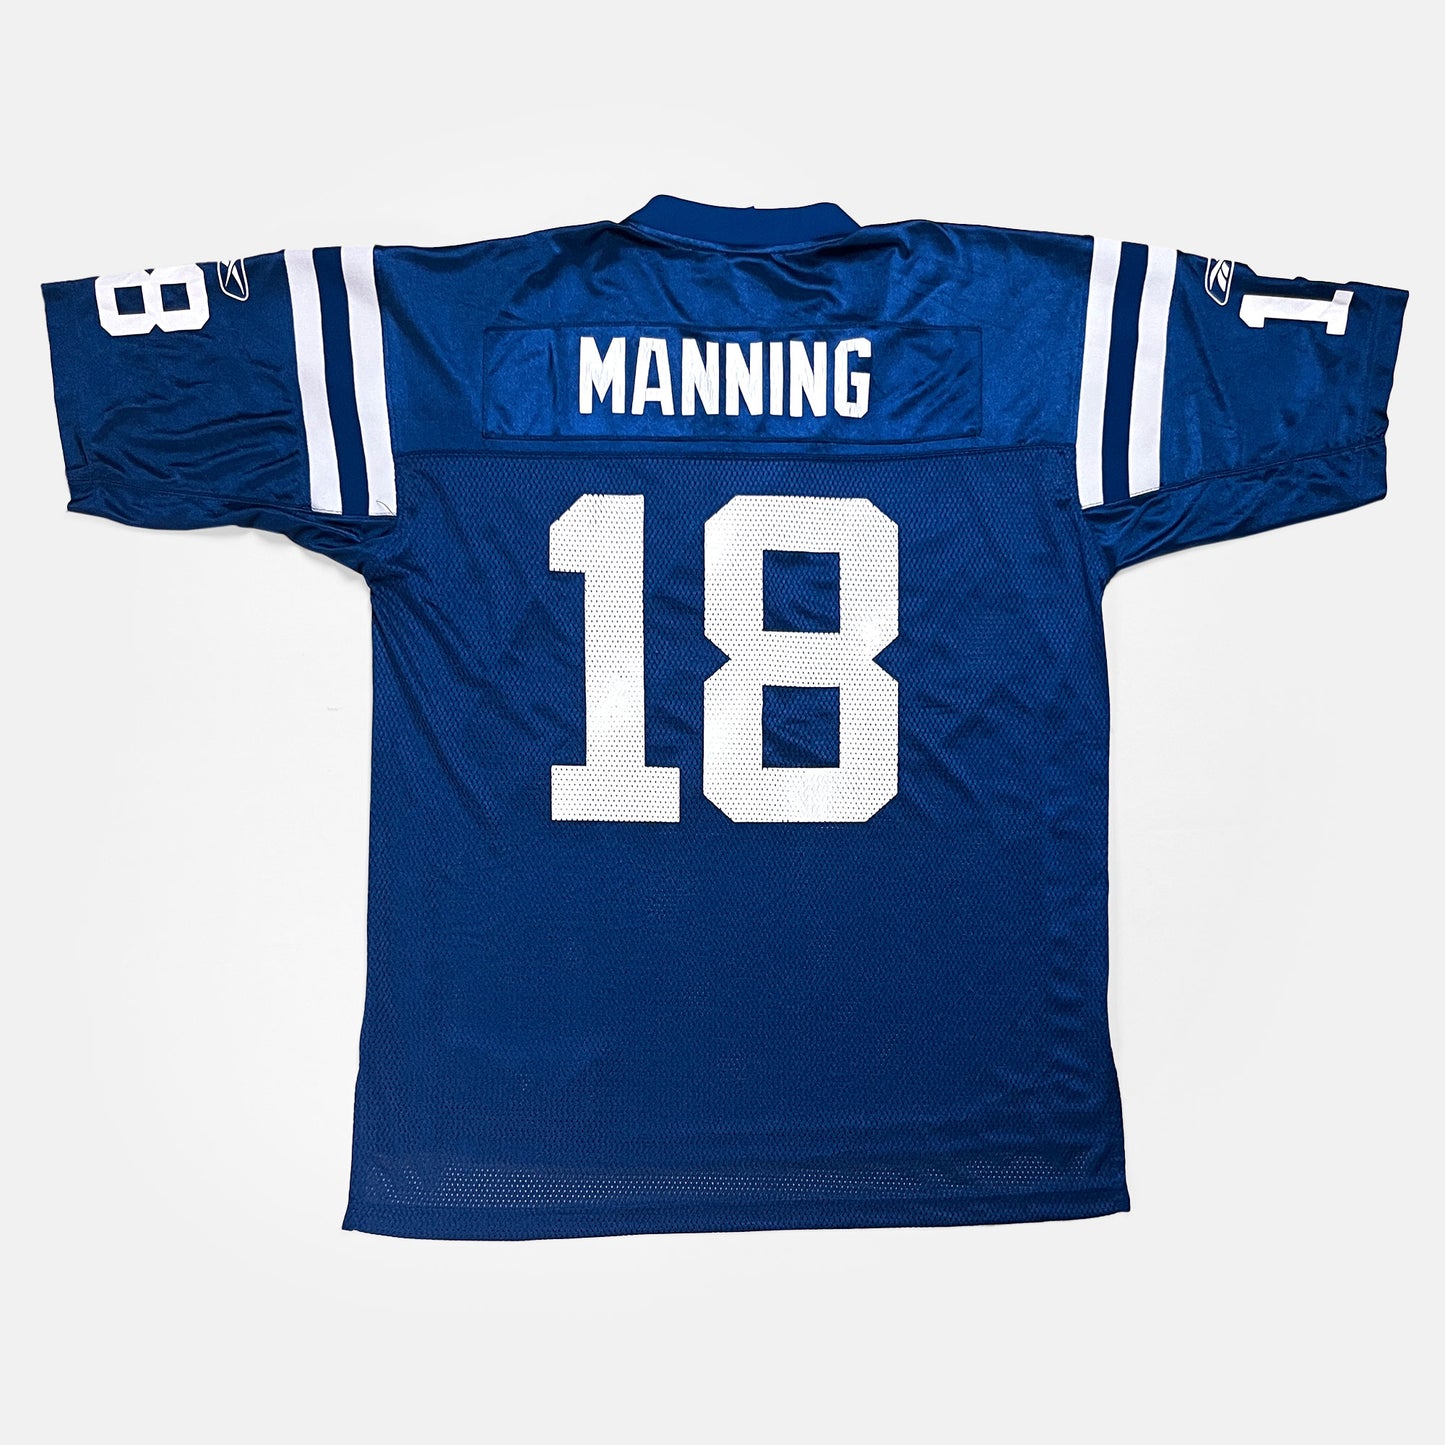 Indianapolis Colts - Peyton Manning - Größe L - Reebok - NFL Trikot